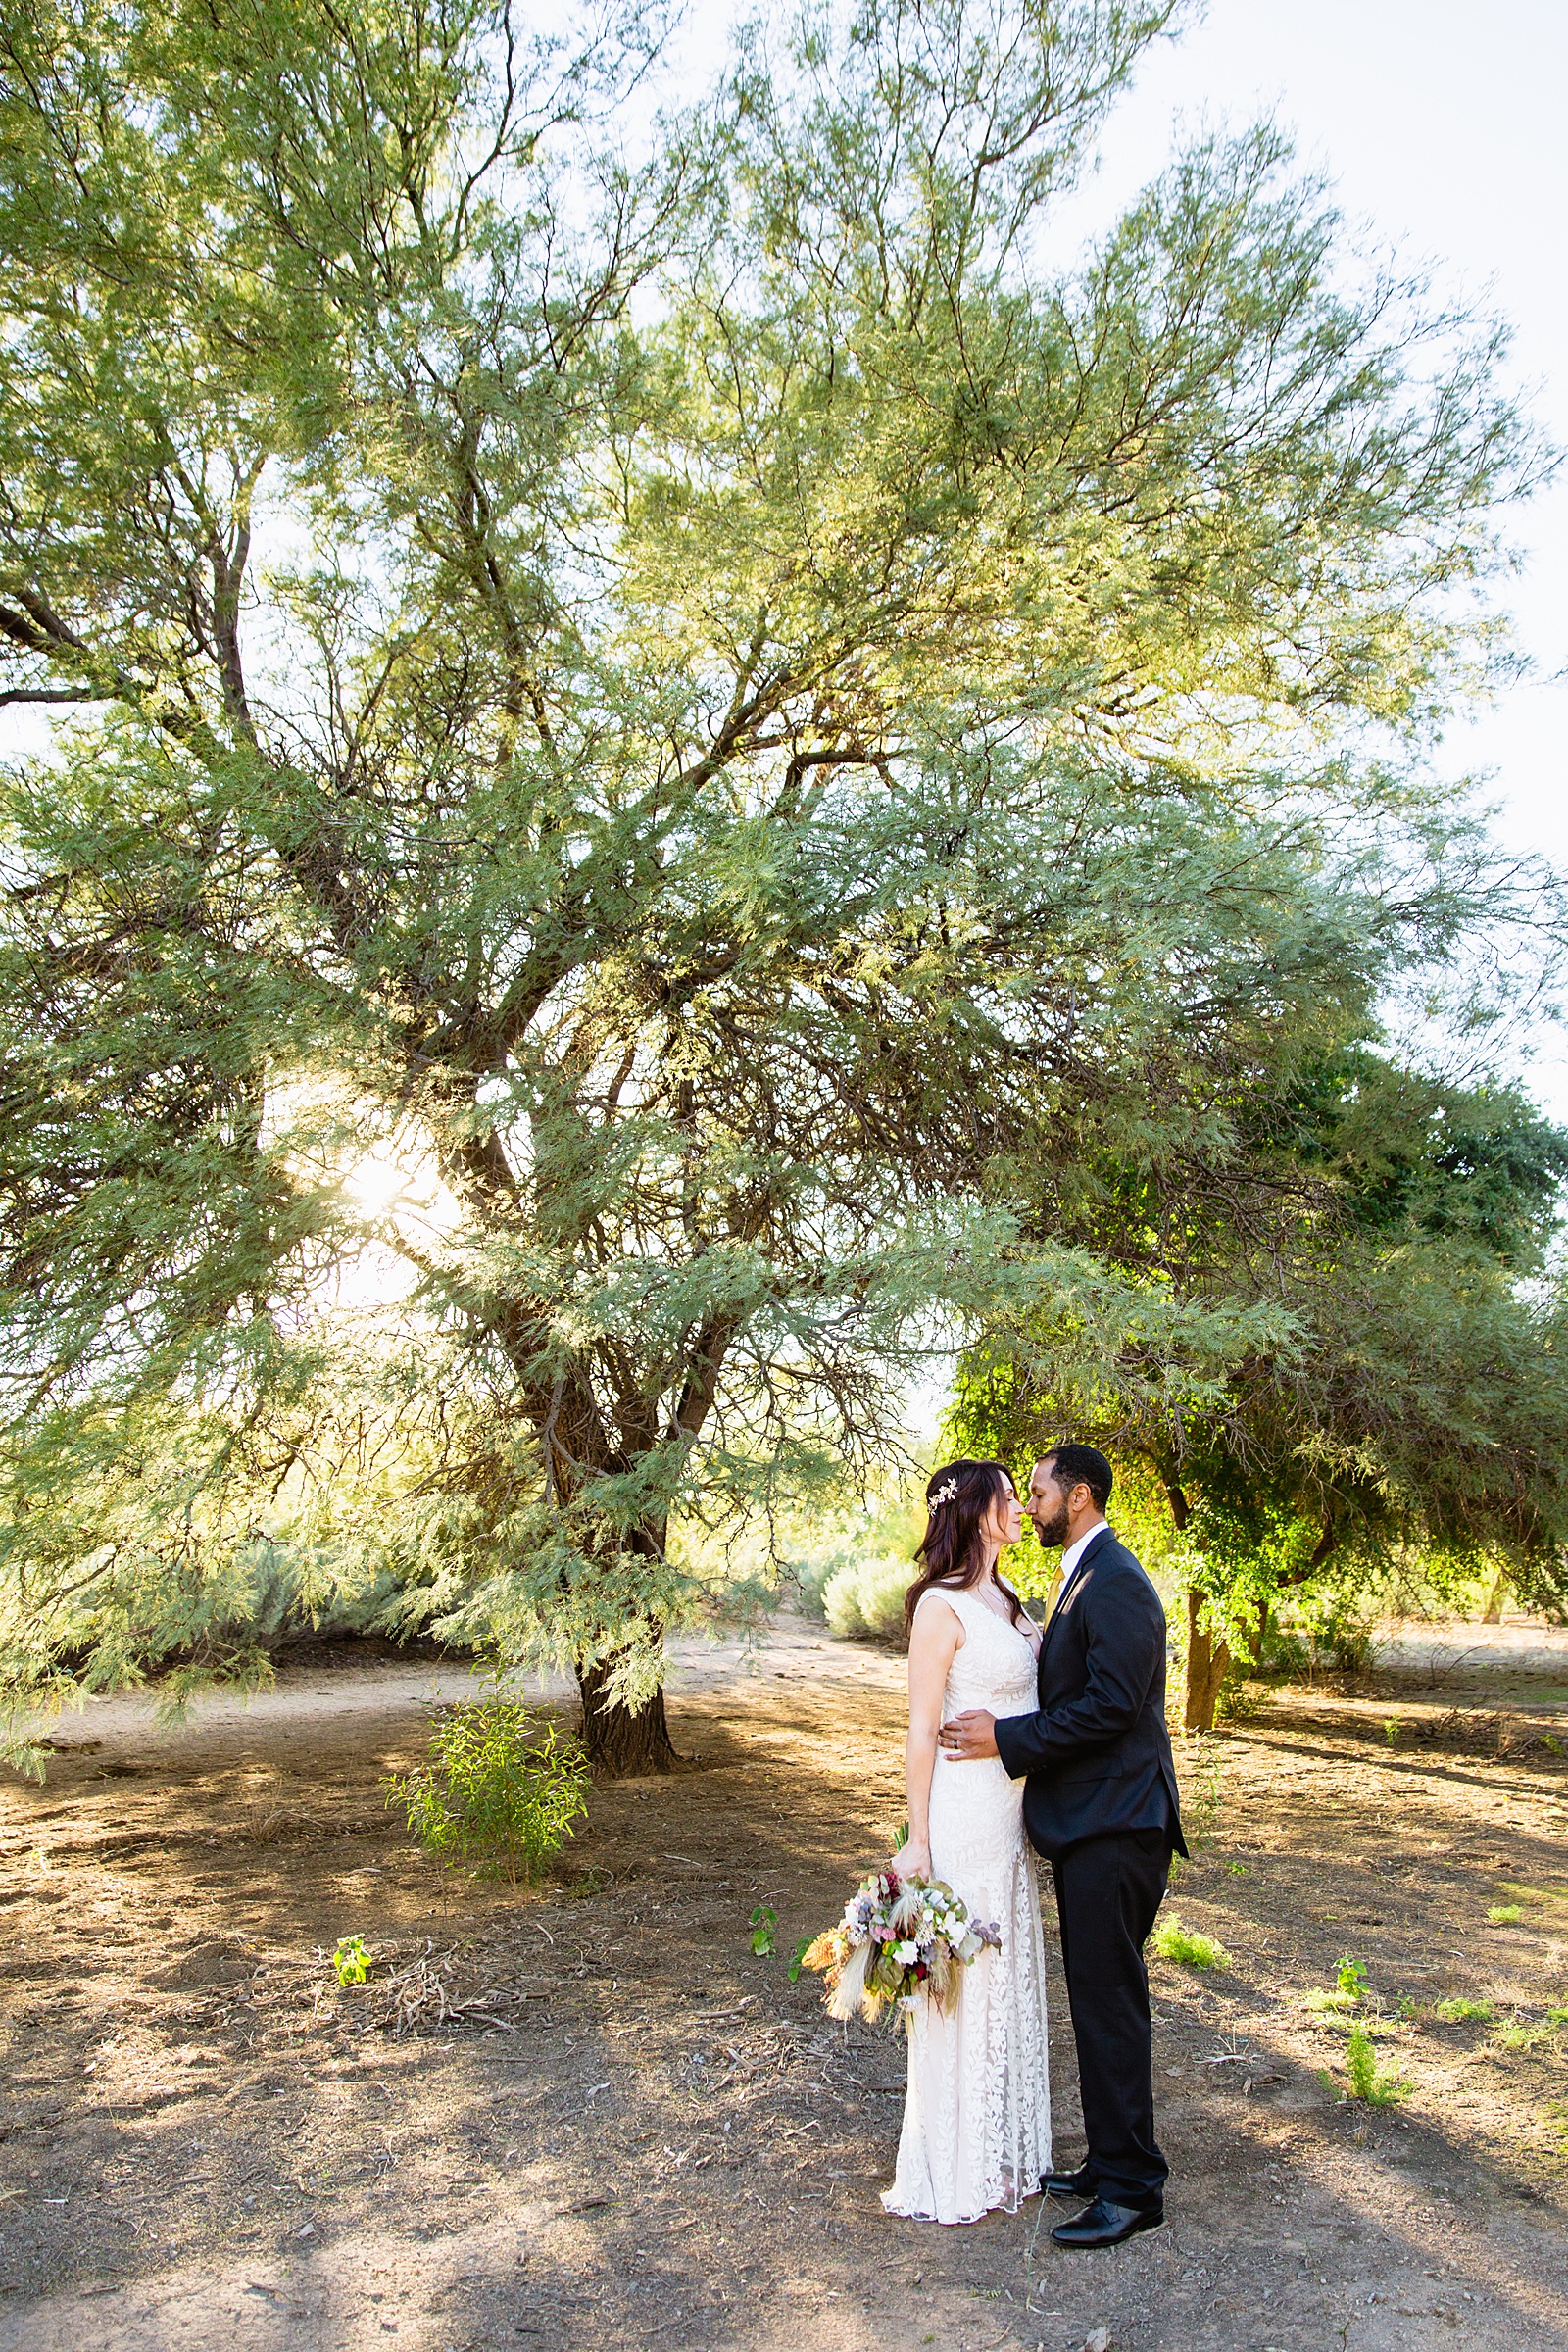 Bride and groom share an intimate moment at their Backyard Micro wedding by Arizona wedding photographer PMA Photography.